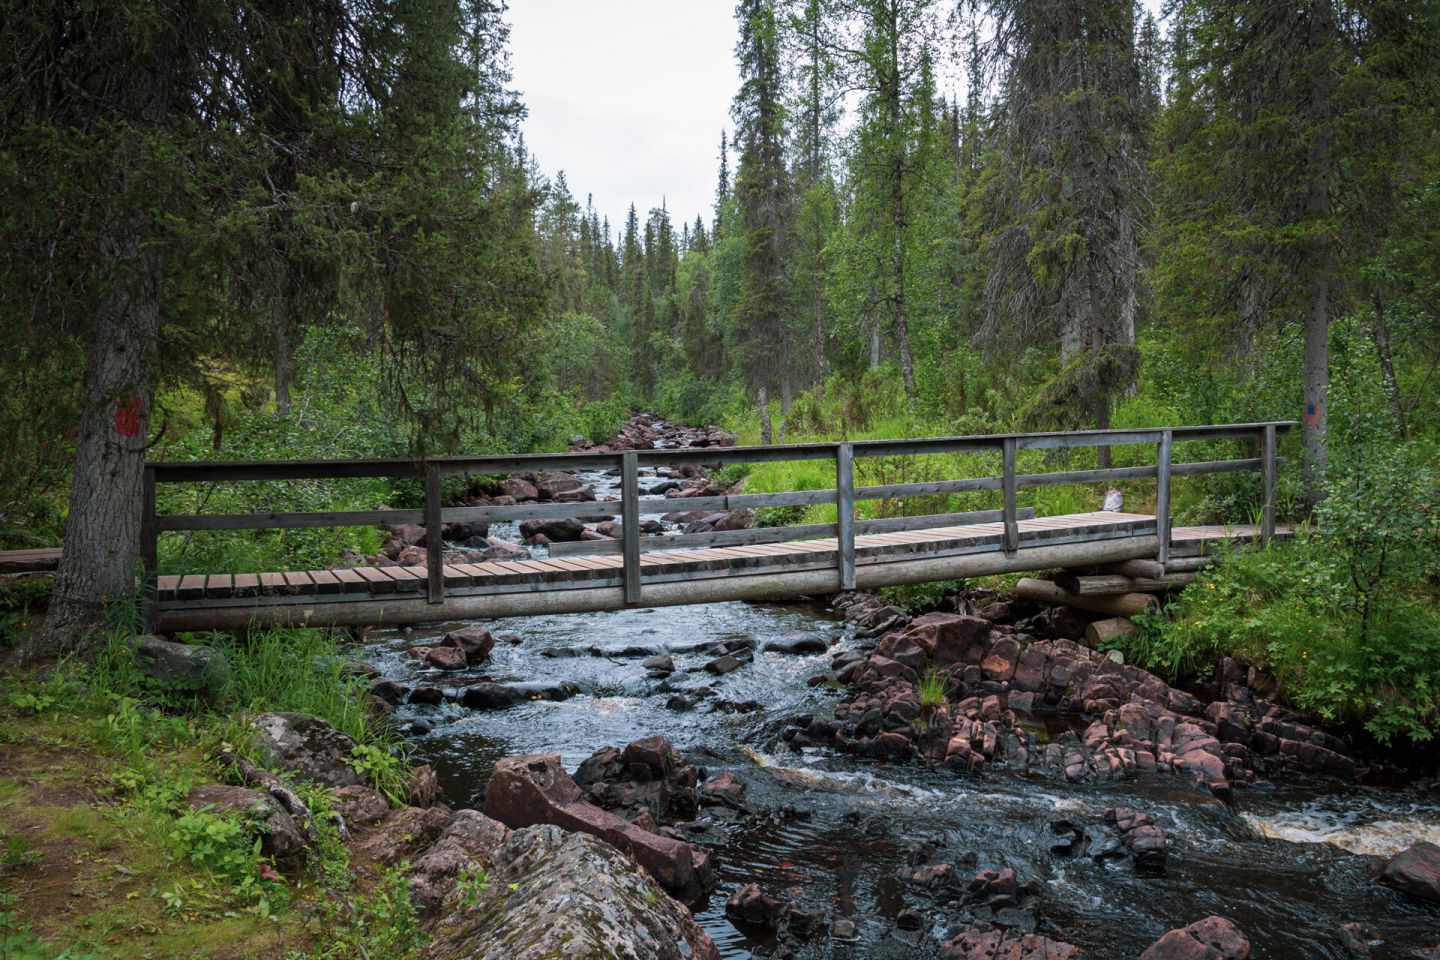 Salmijoki Ravine in Salla, Lapland, Finland